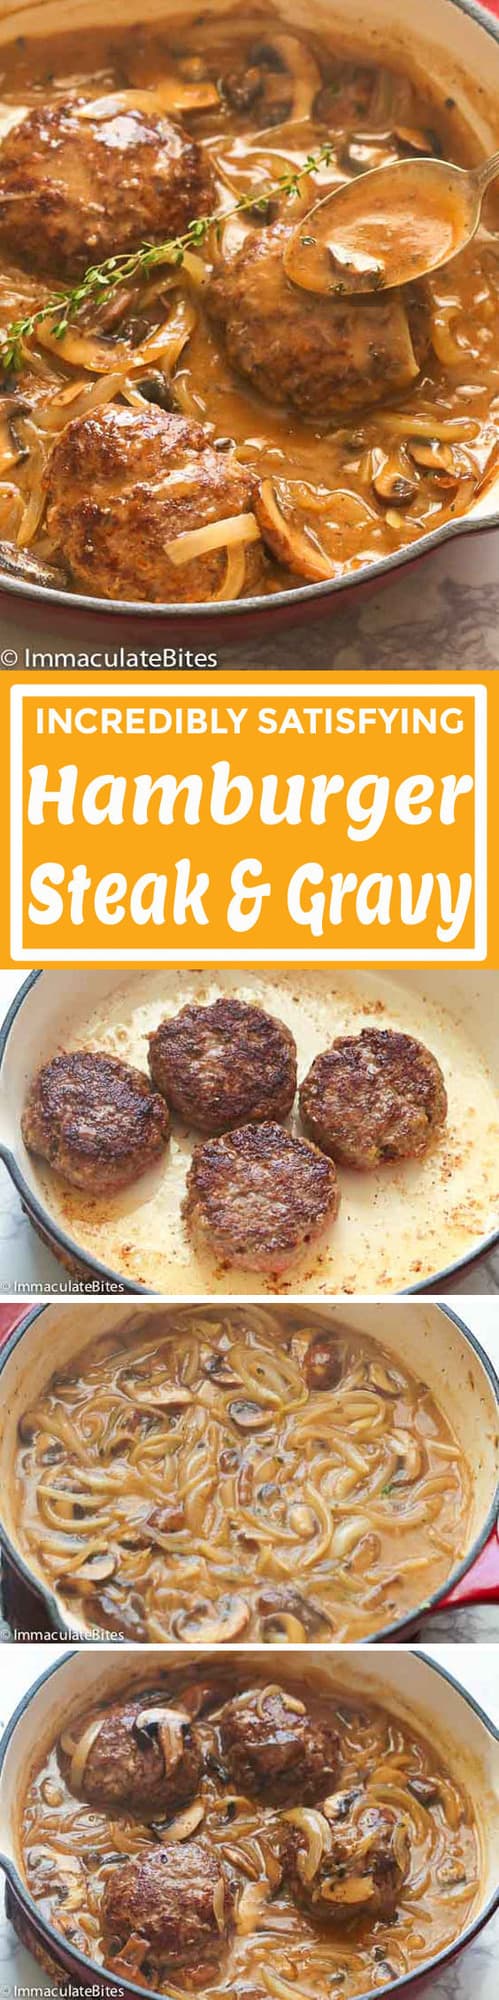 Hamburger Steak and Gravy - Immaculate Bites